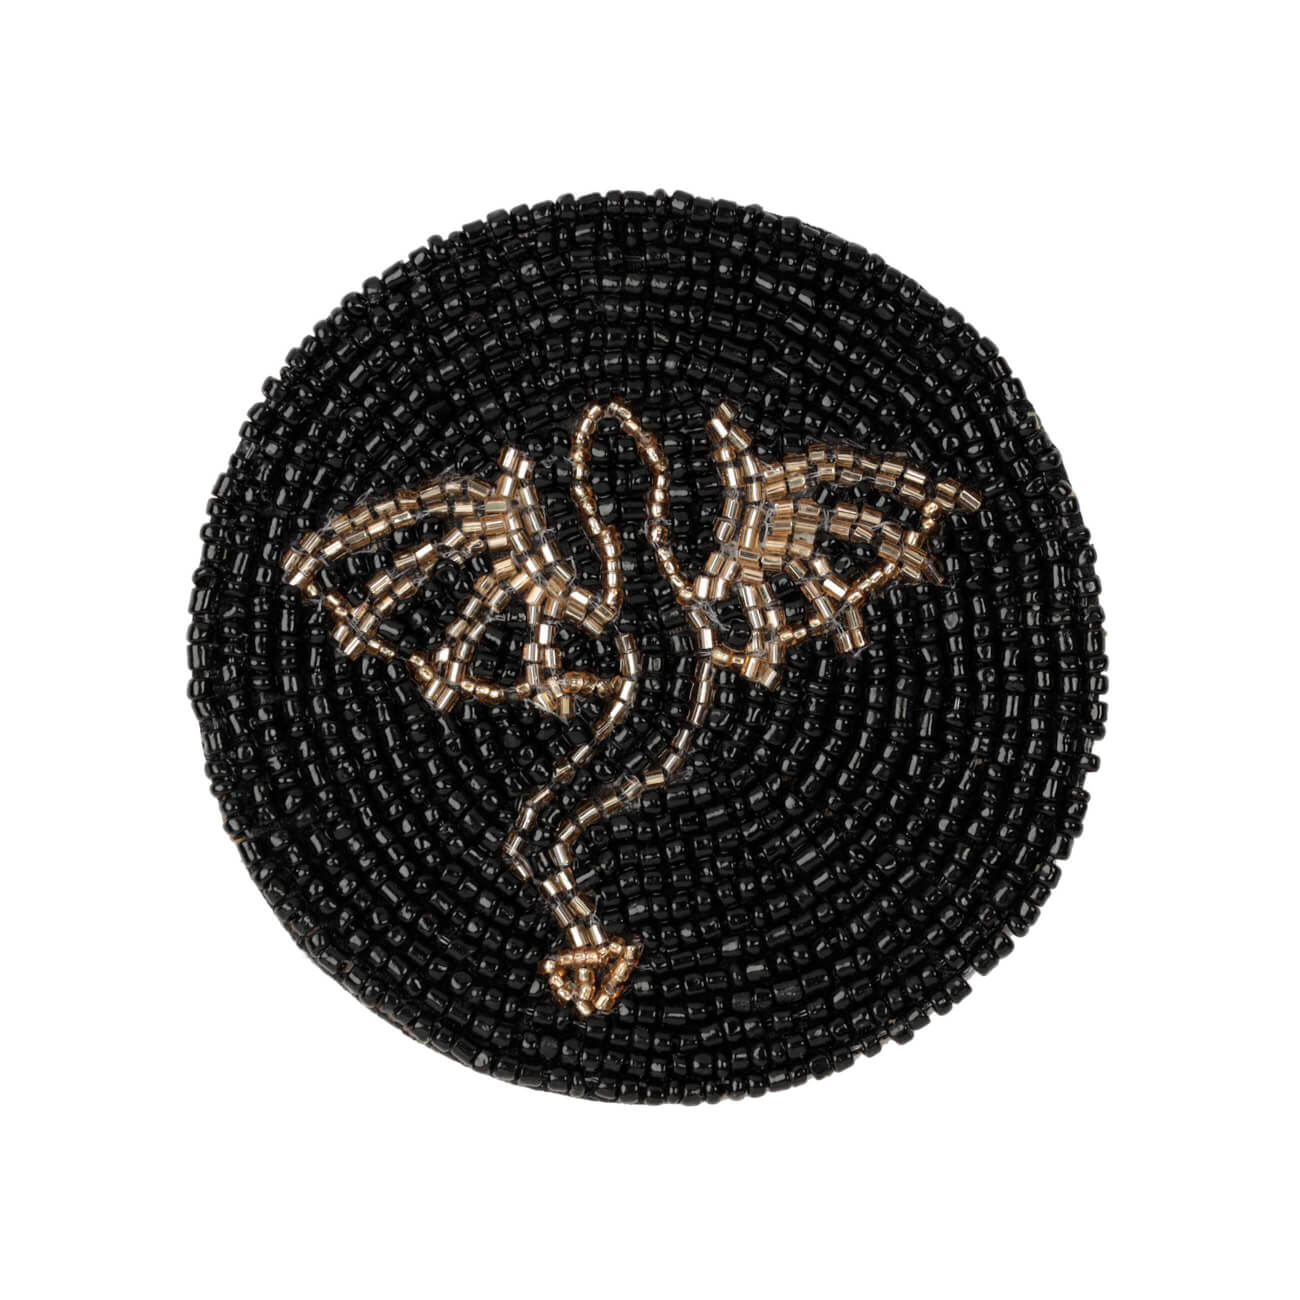 Подставка под кружку, 10 см, бисер, круглая, черная, Дракон, Art beads салфетка под приборы 36 см бисер круглая бело золотистая rotation beads